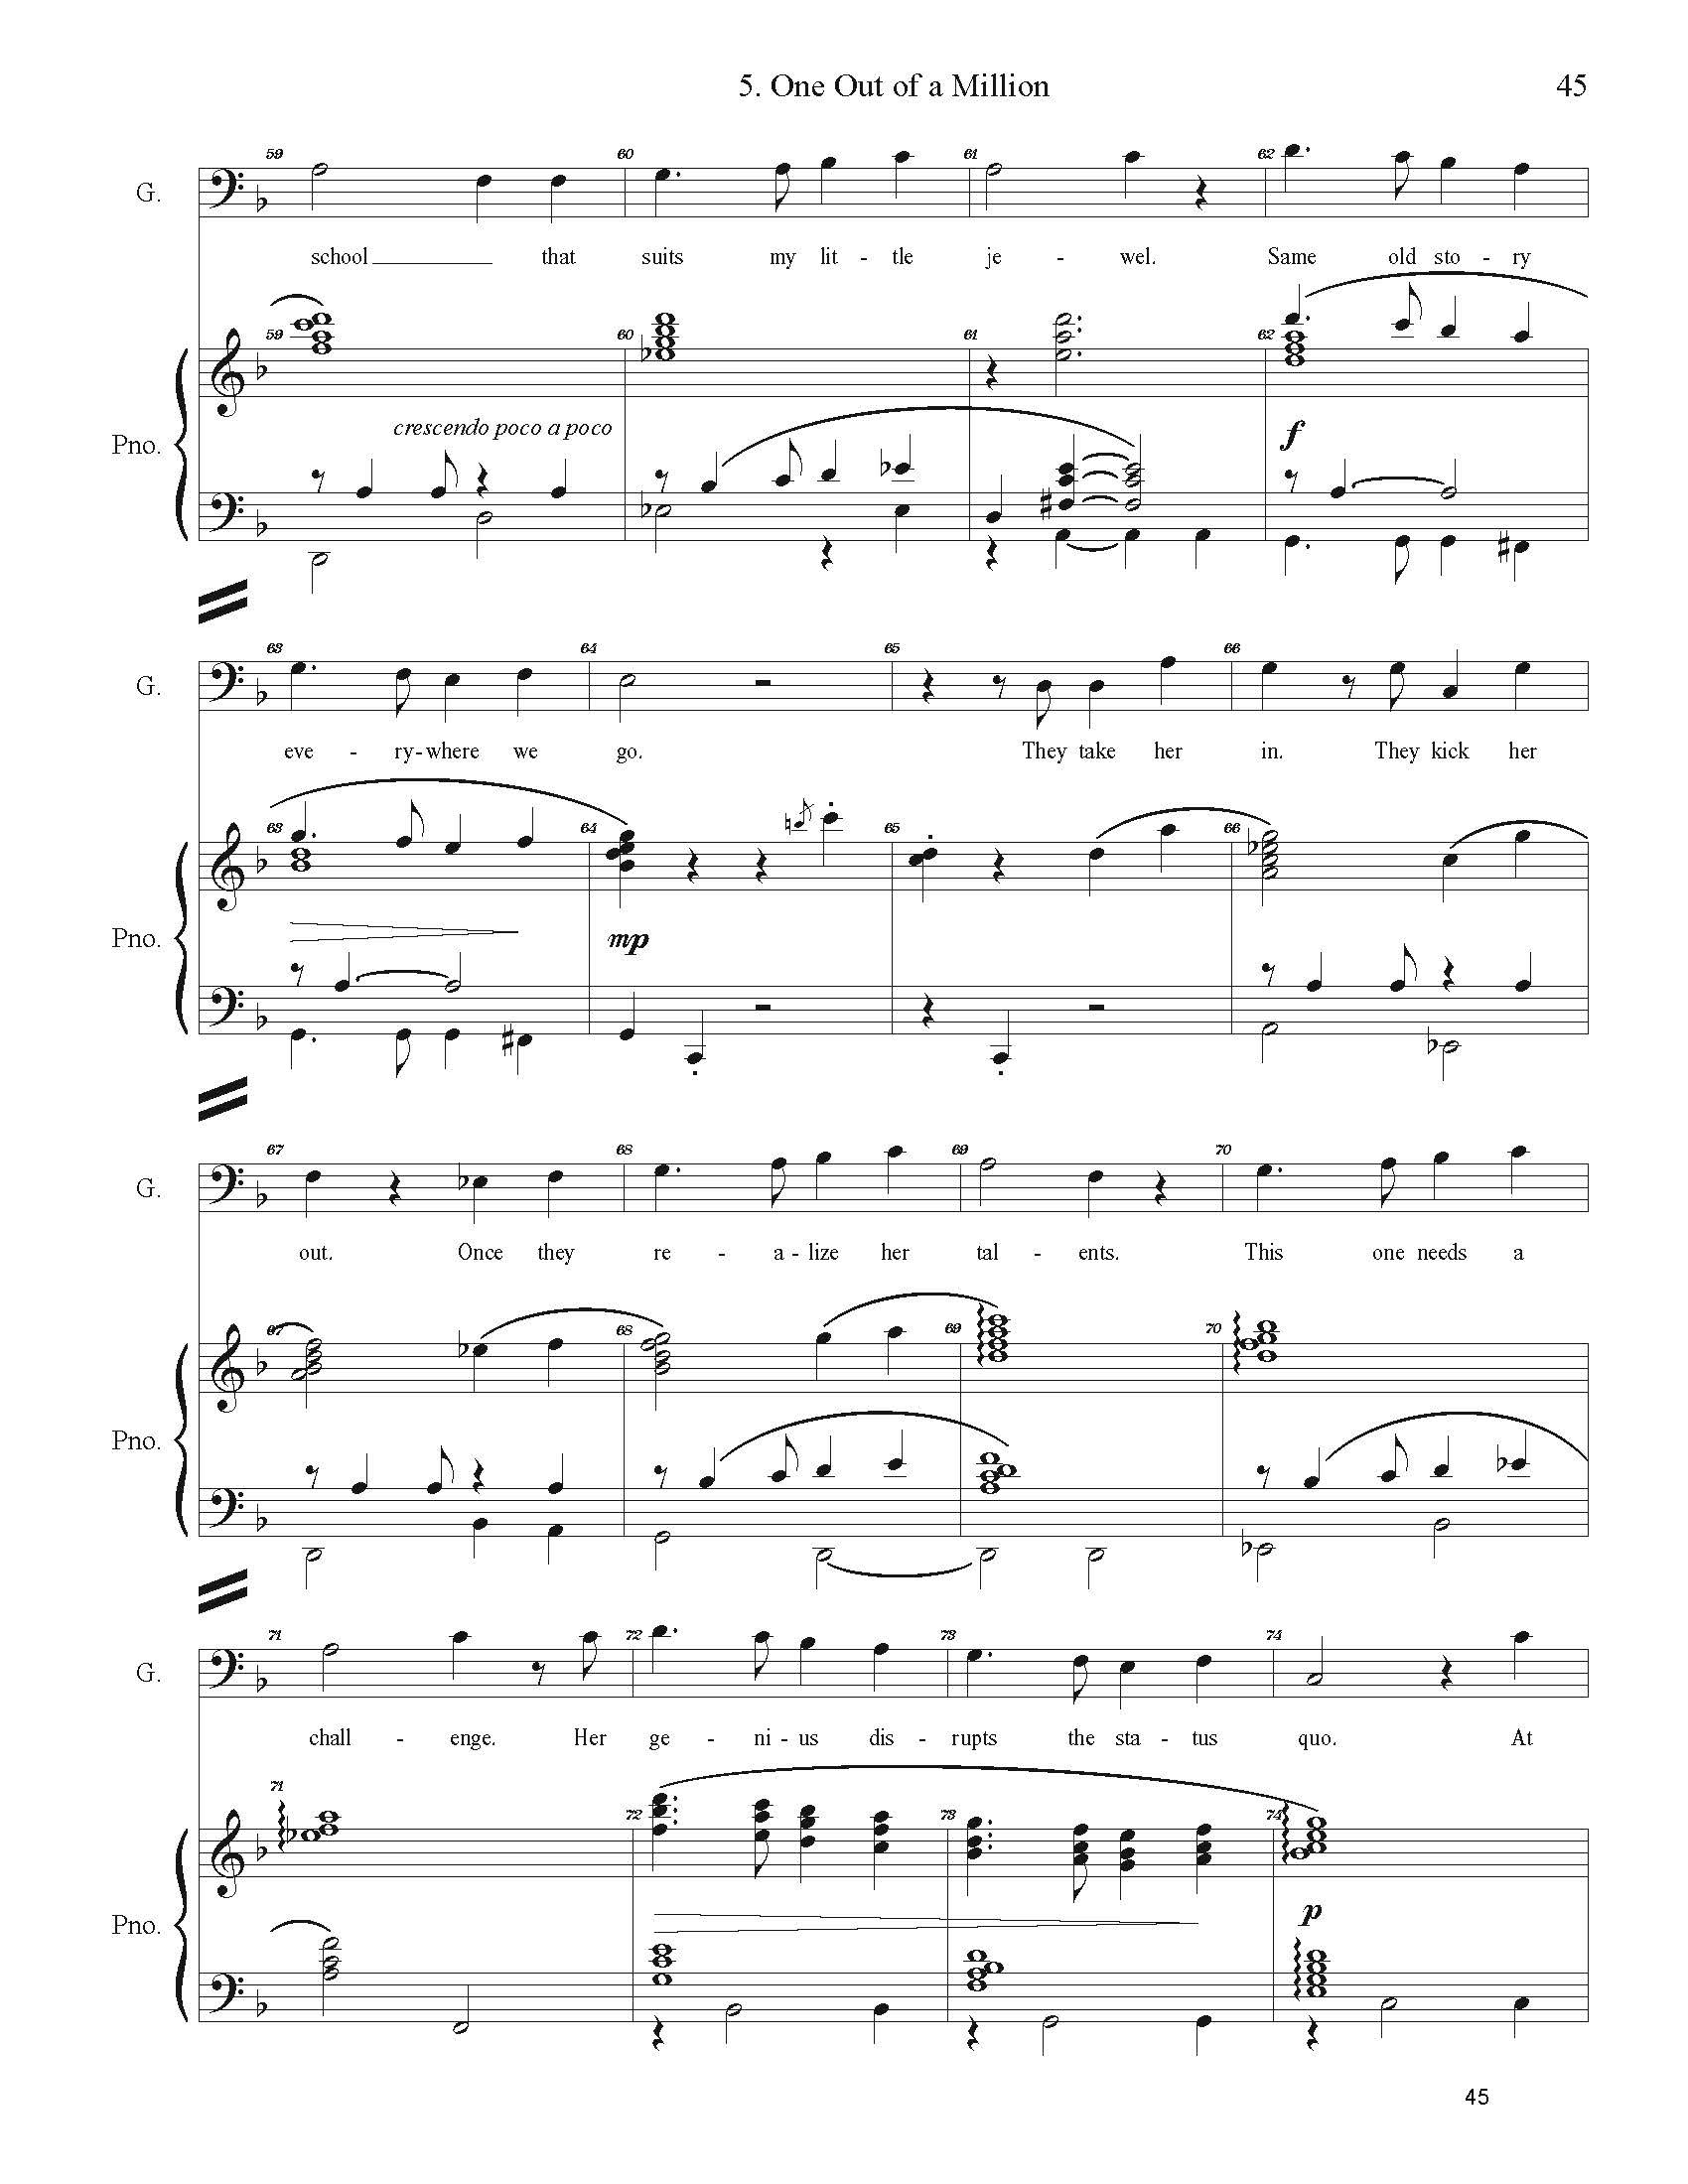 FULL PIANO VOCAL SCORE DRAFT 1 - Score_Page_045.jpg